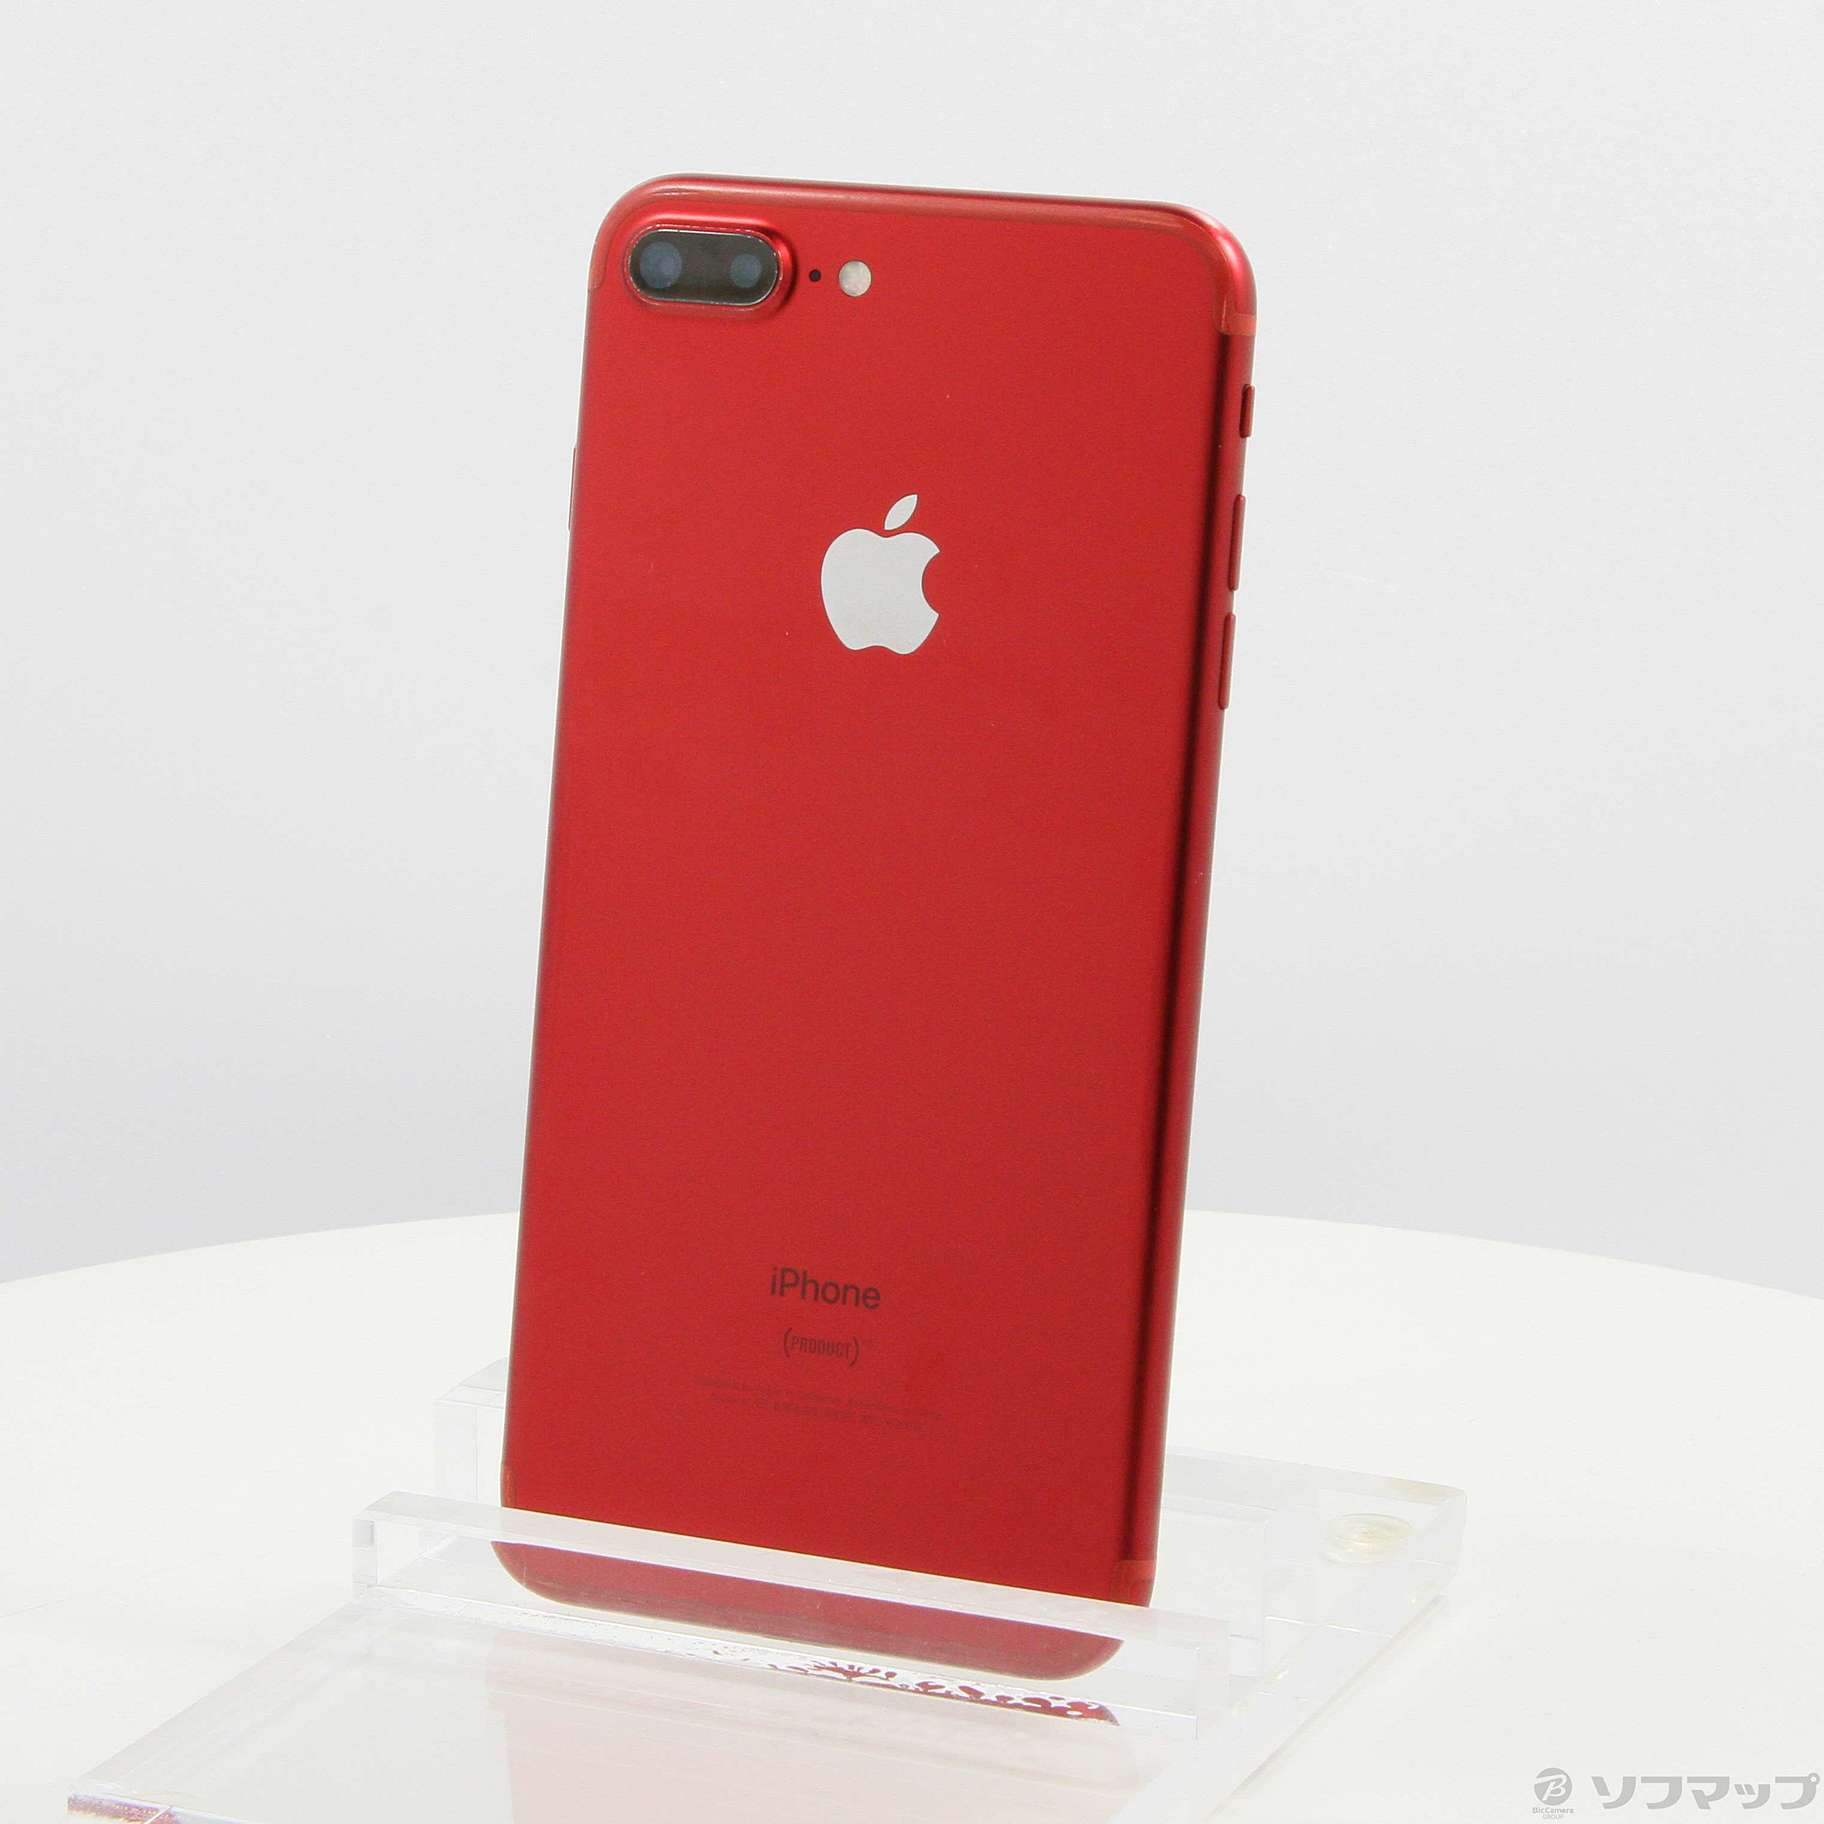 iPhone 7 Red 128 GB Softbank - スマートフォン本体